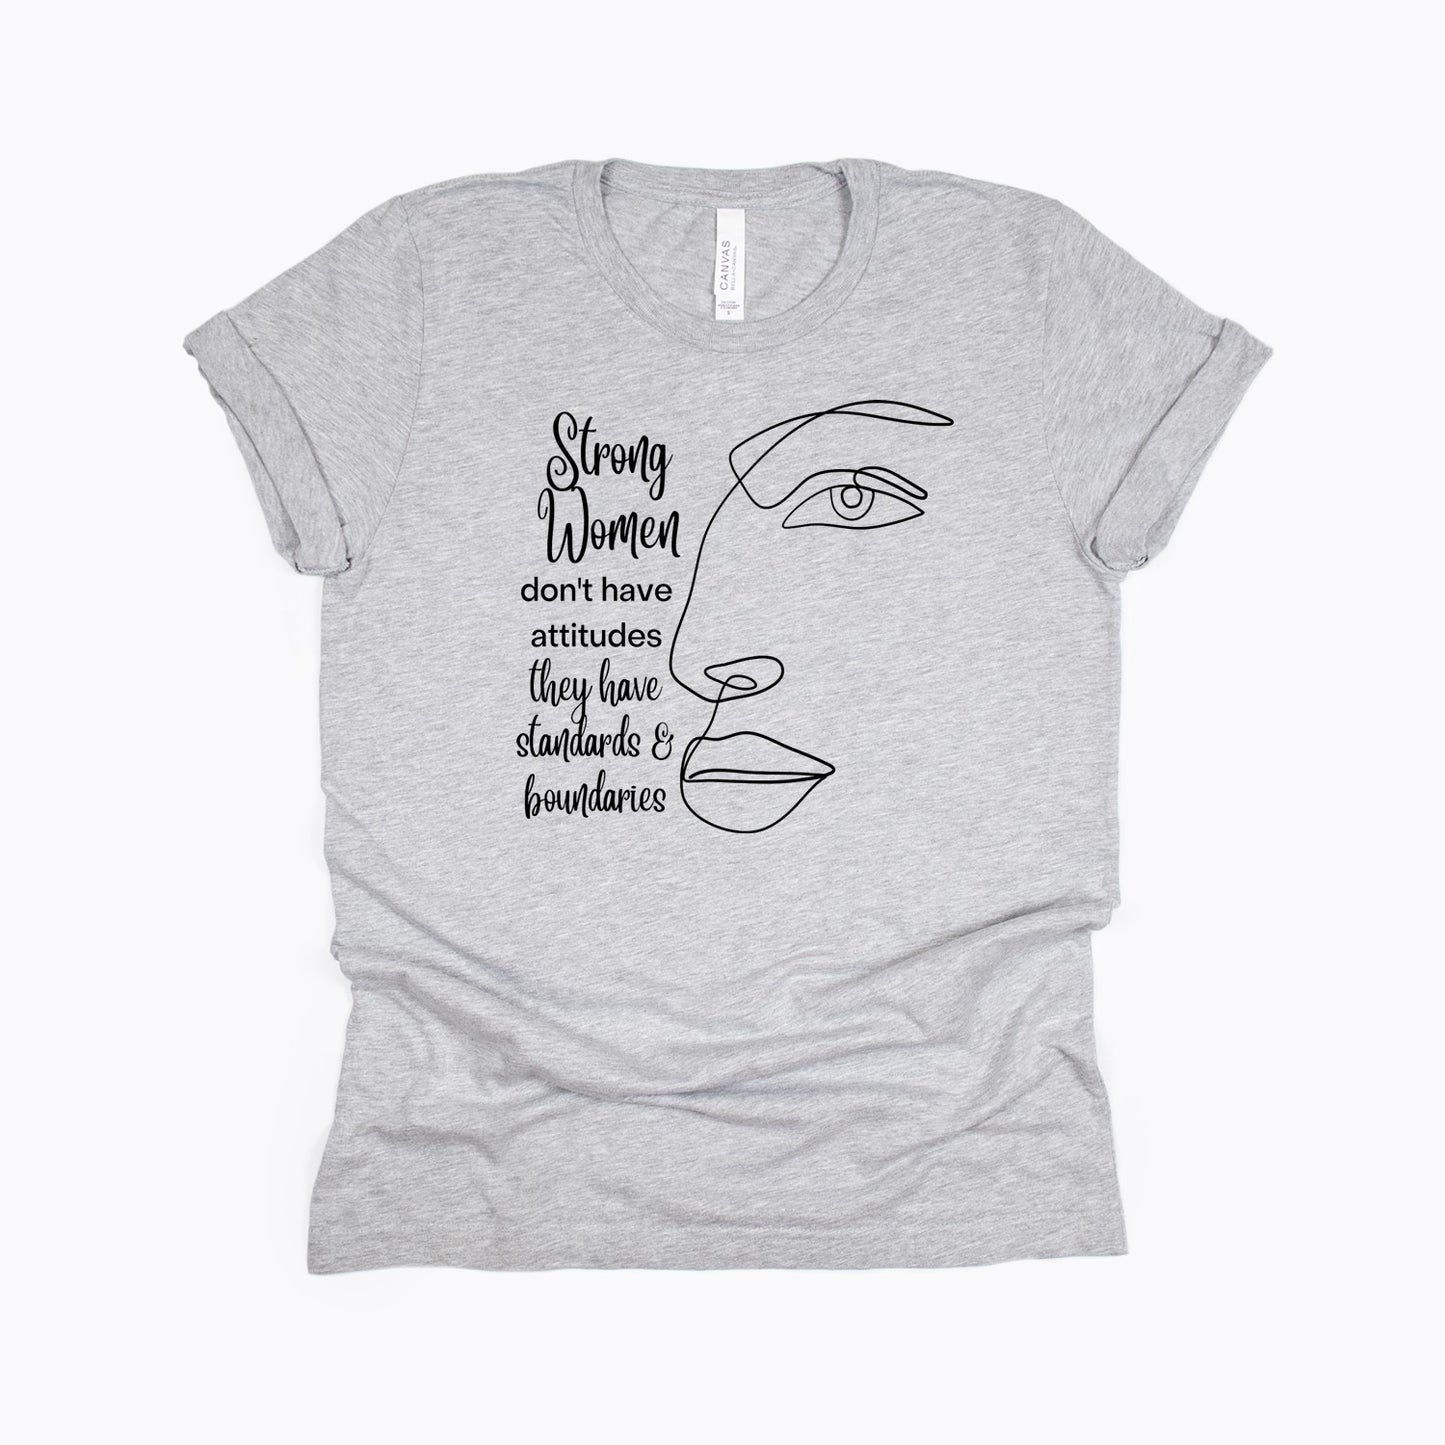 Strong Women don't have attitudes - T-shirt